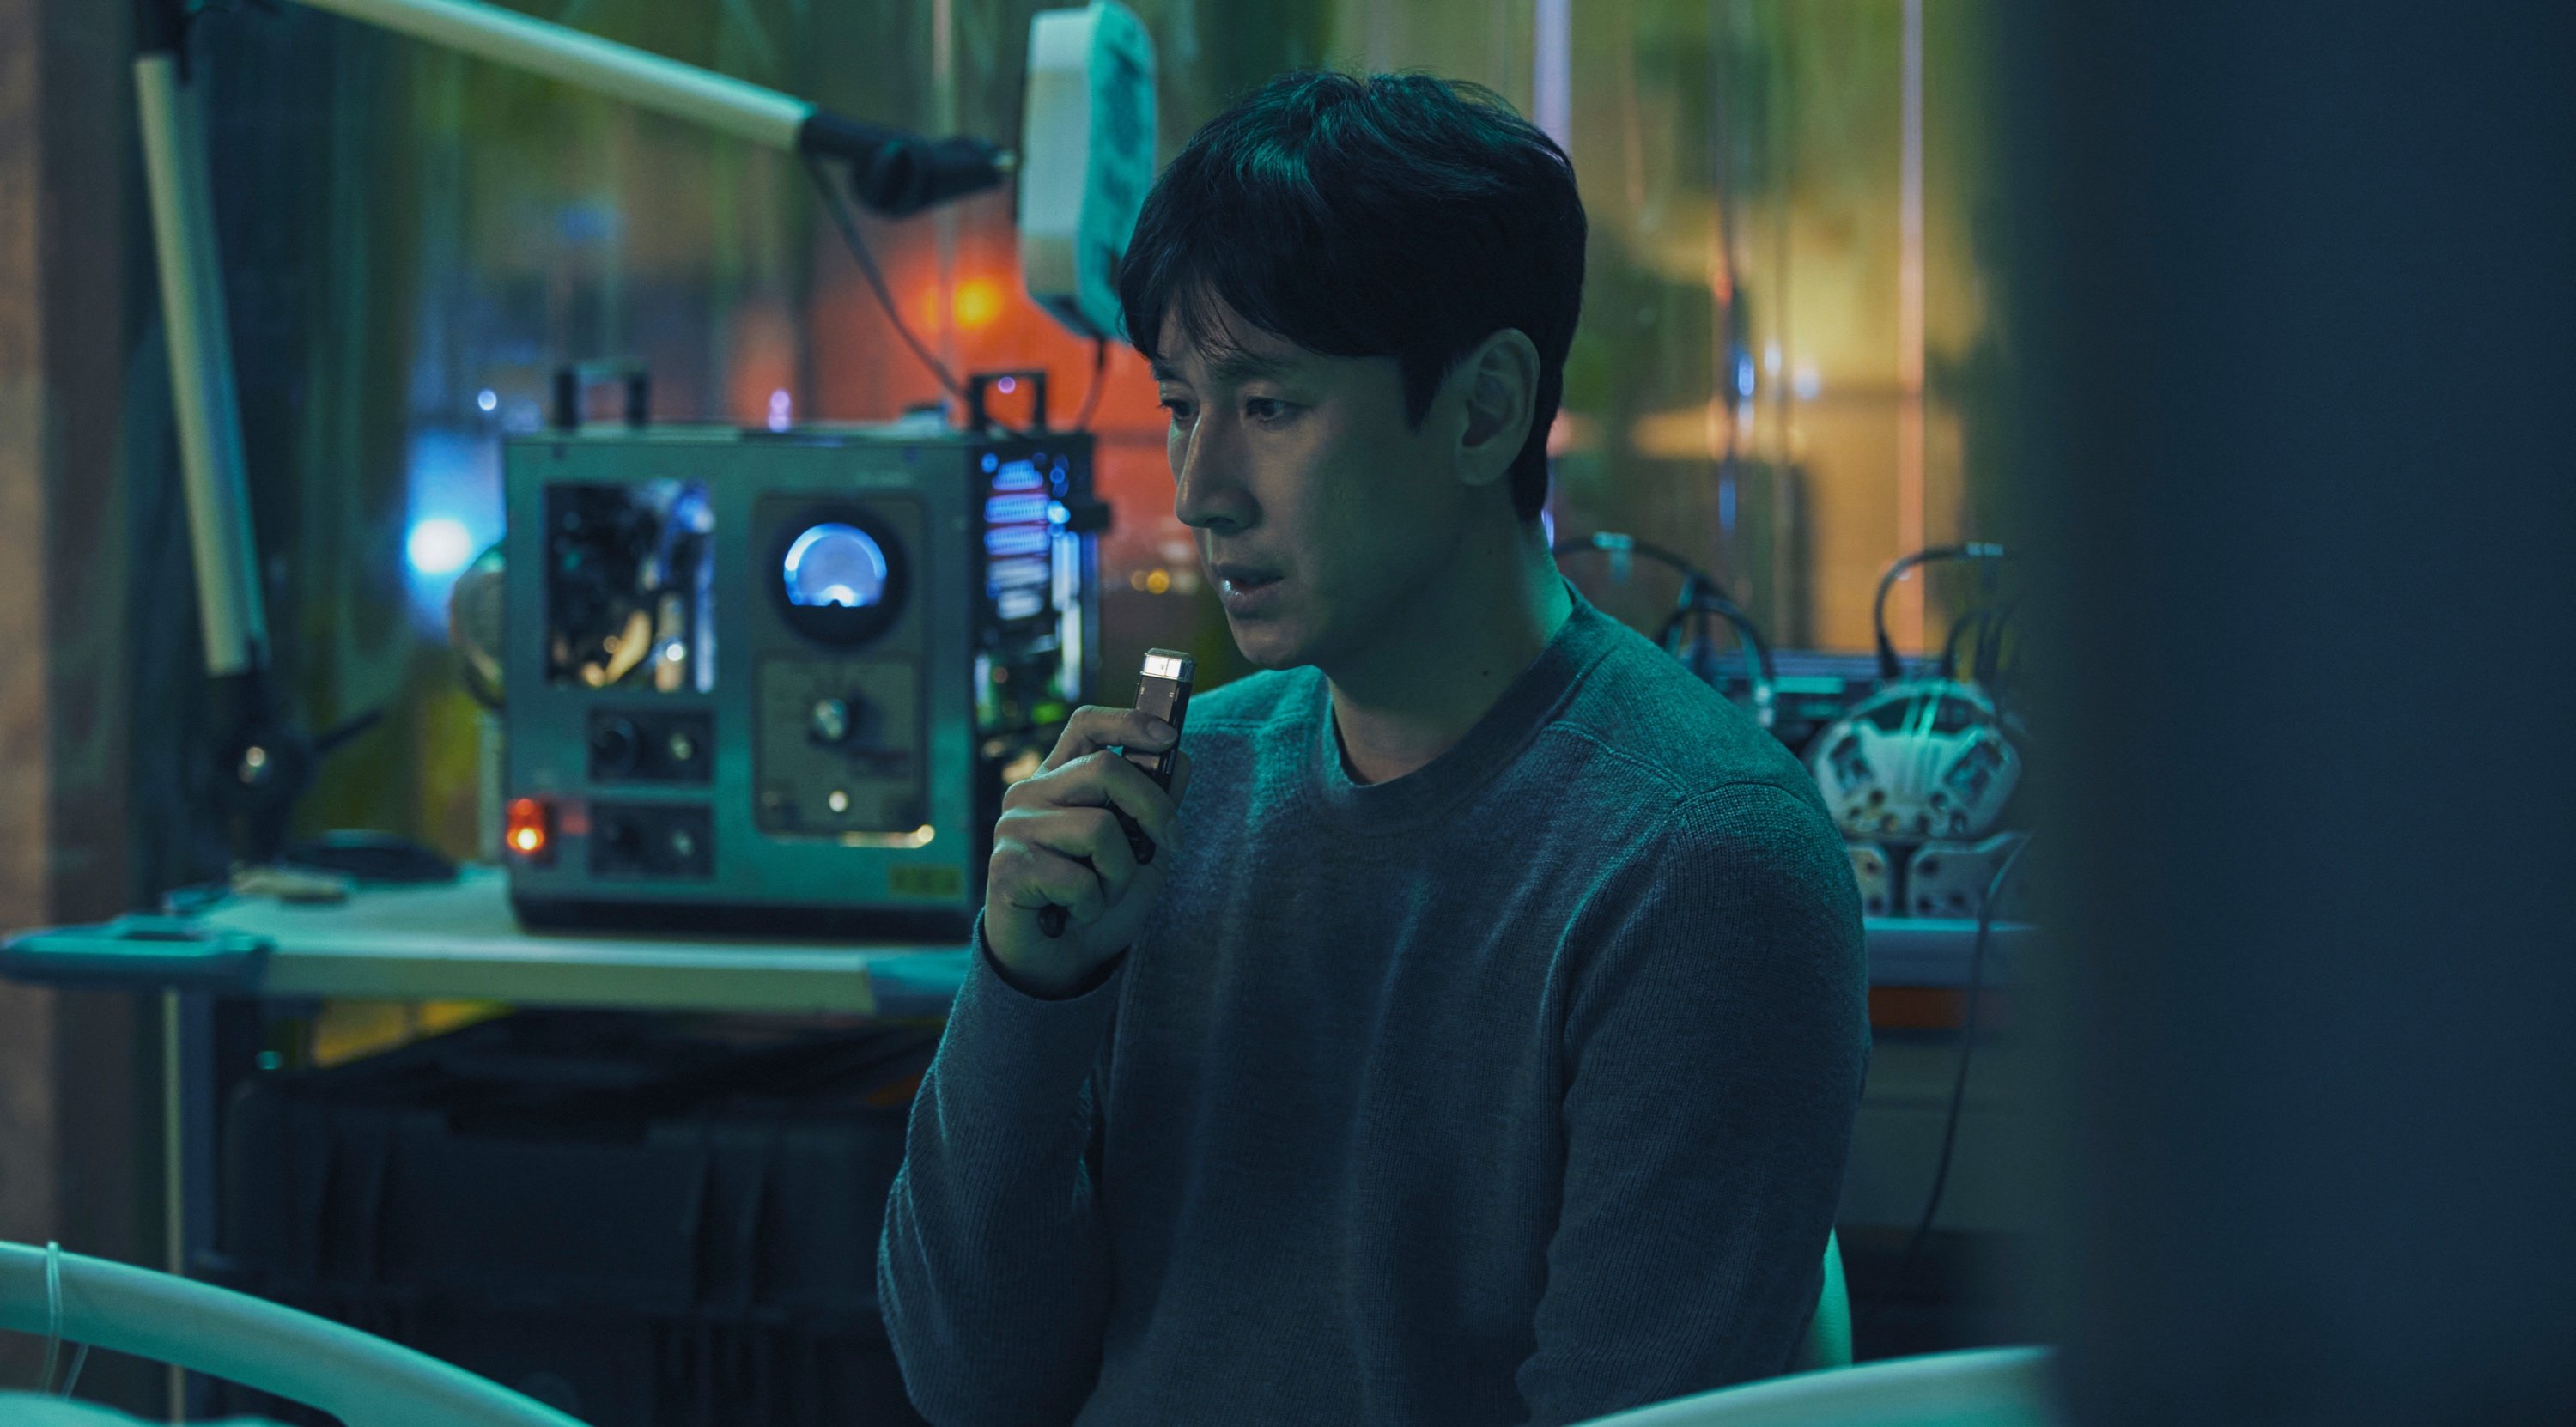 Koh Sewon for 'Dr. Brain' episode 2 in medical basement talking to recorder.